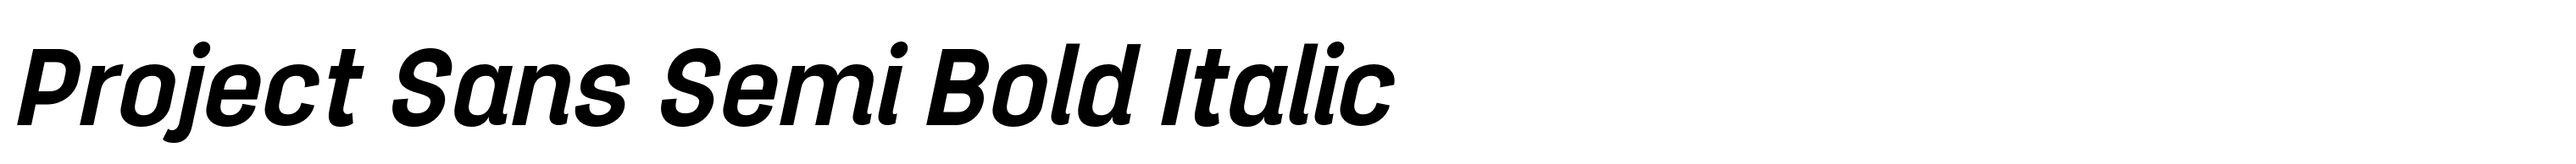 Project Sans Semi Bold Italic